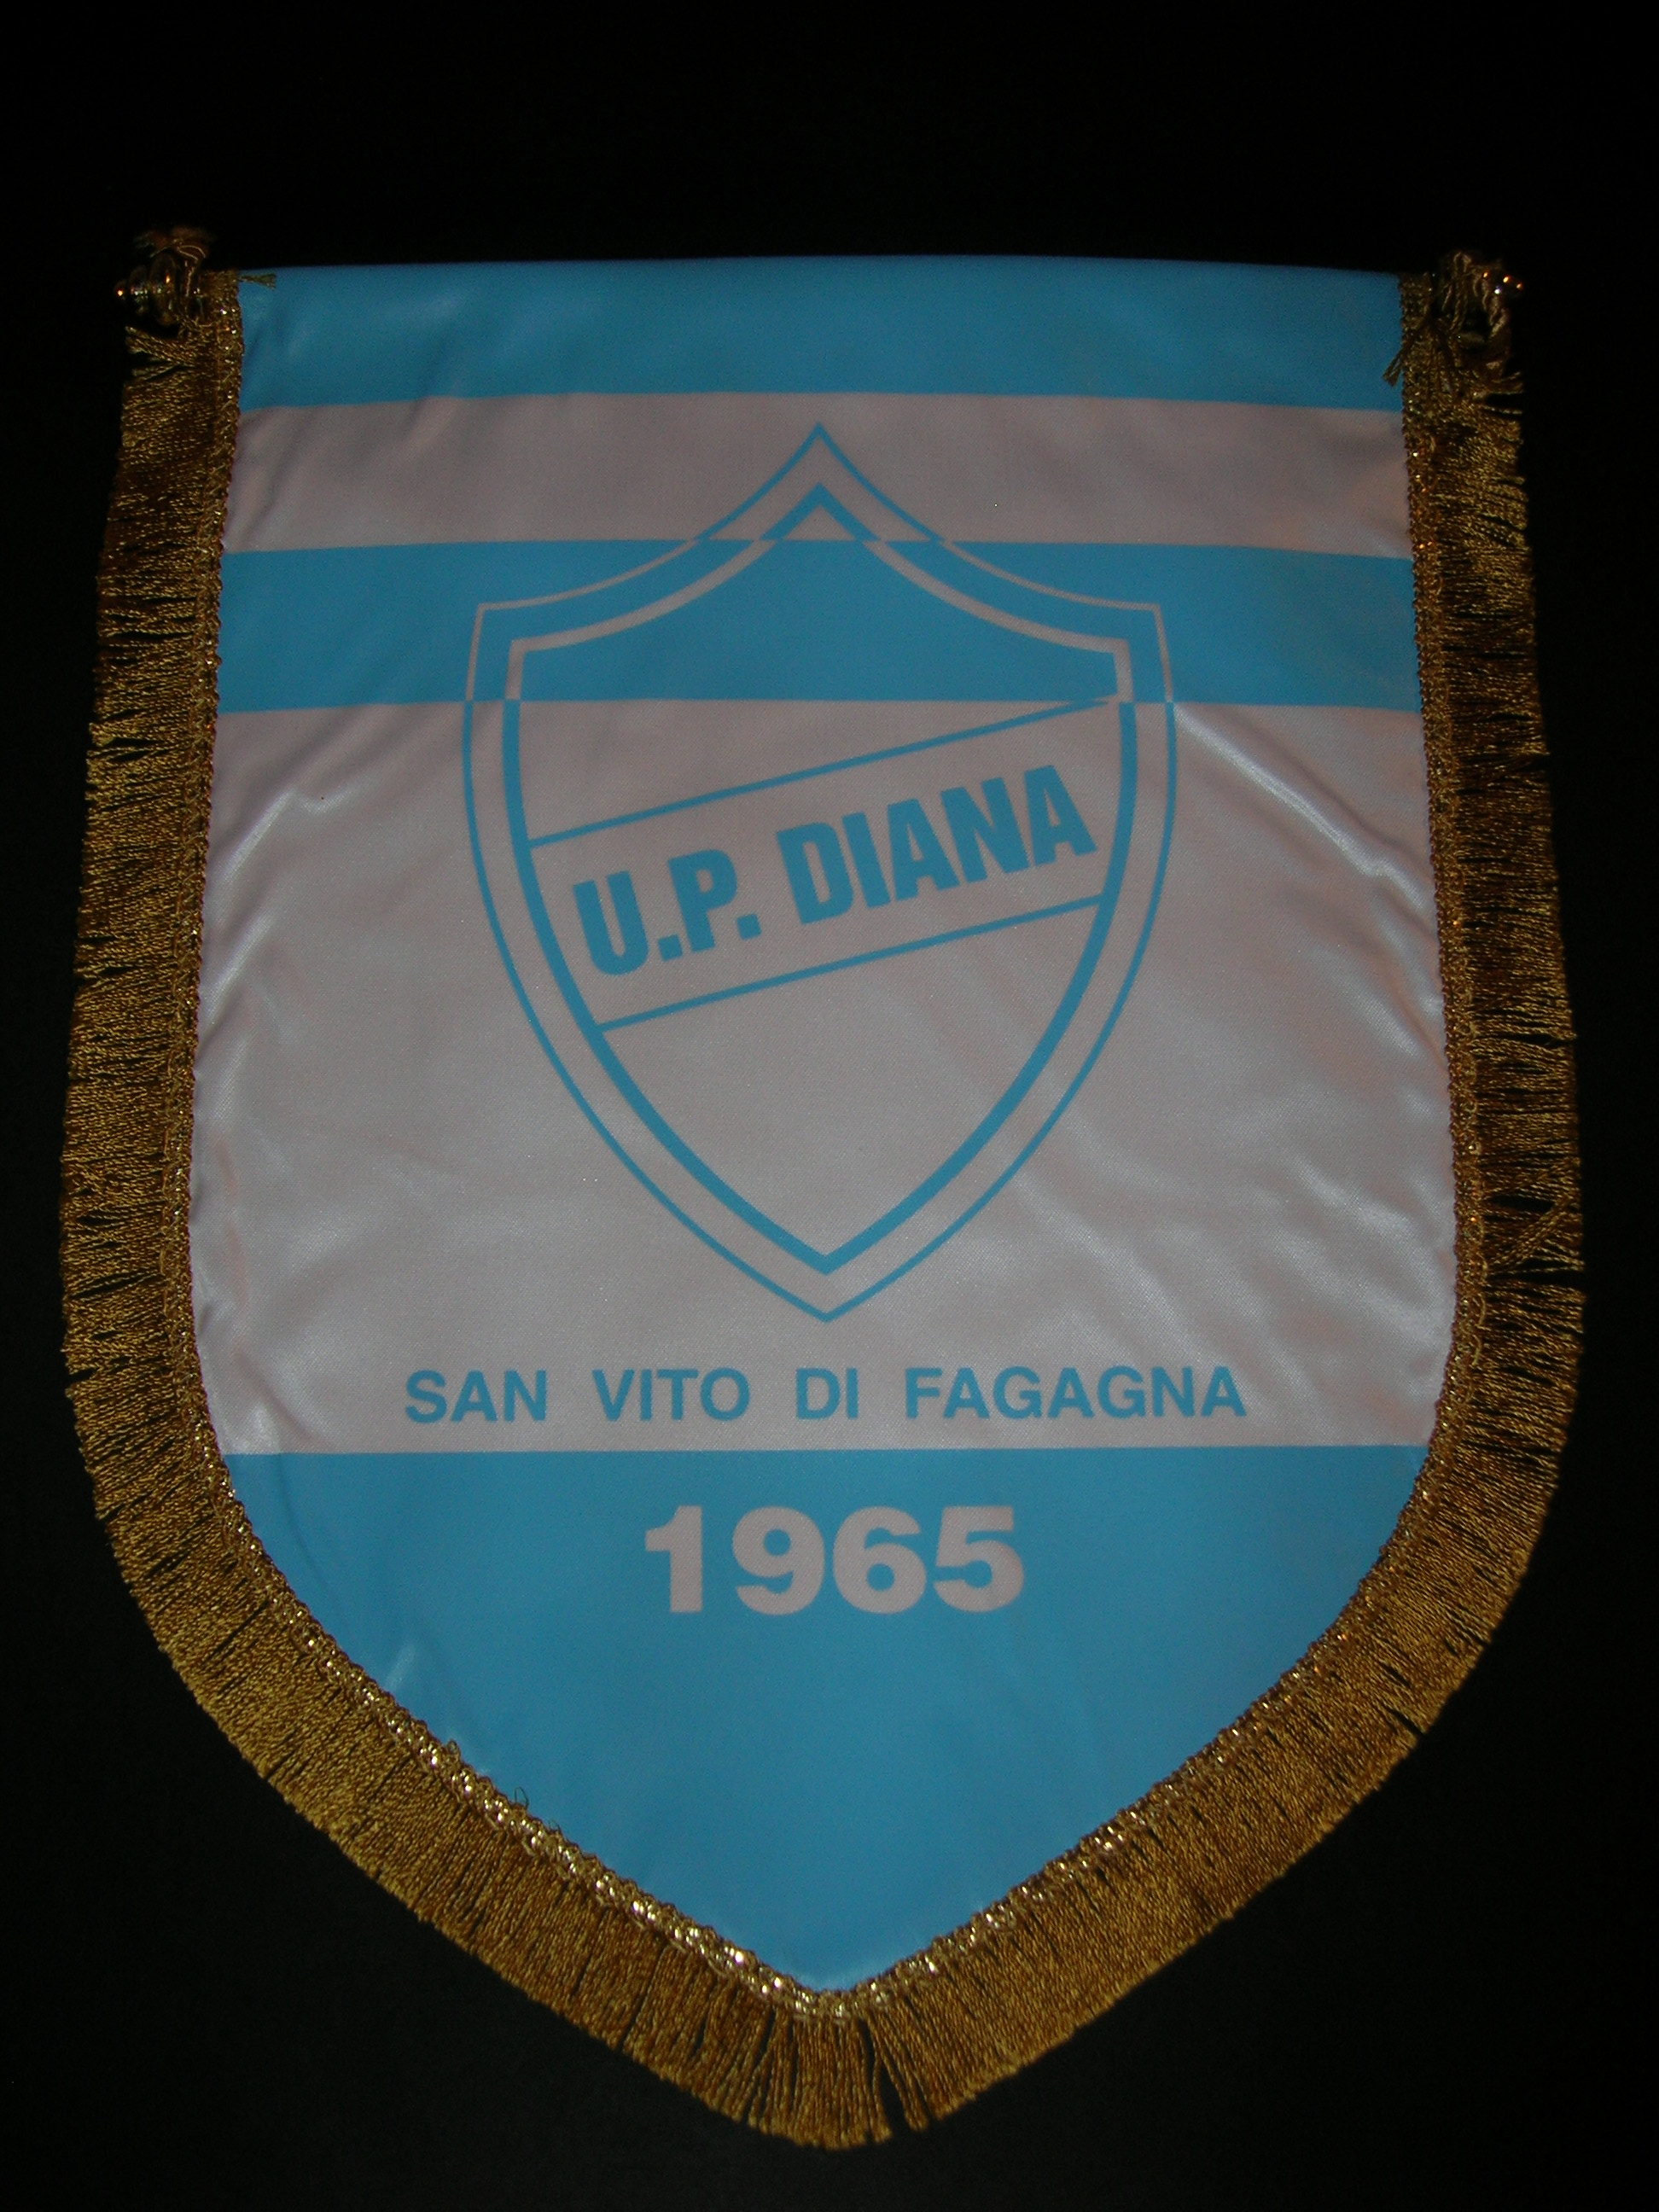 UP. Diana  S. Vito di Fagagna 176